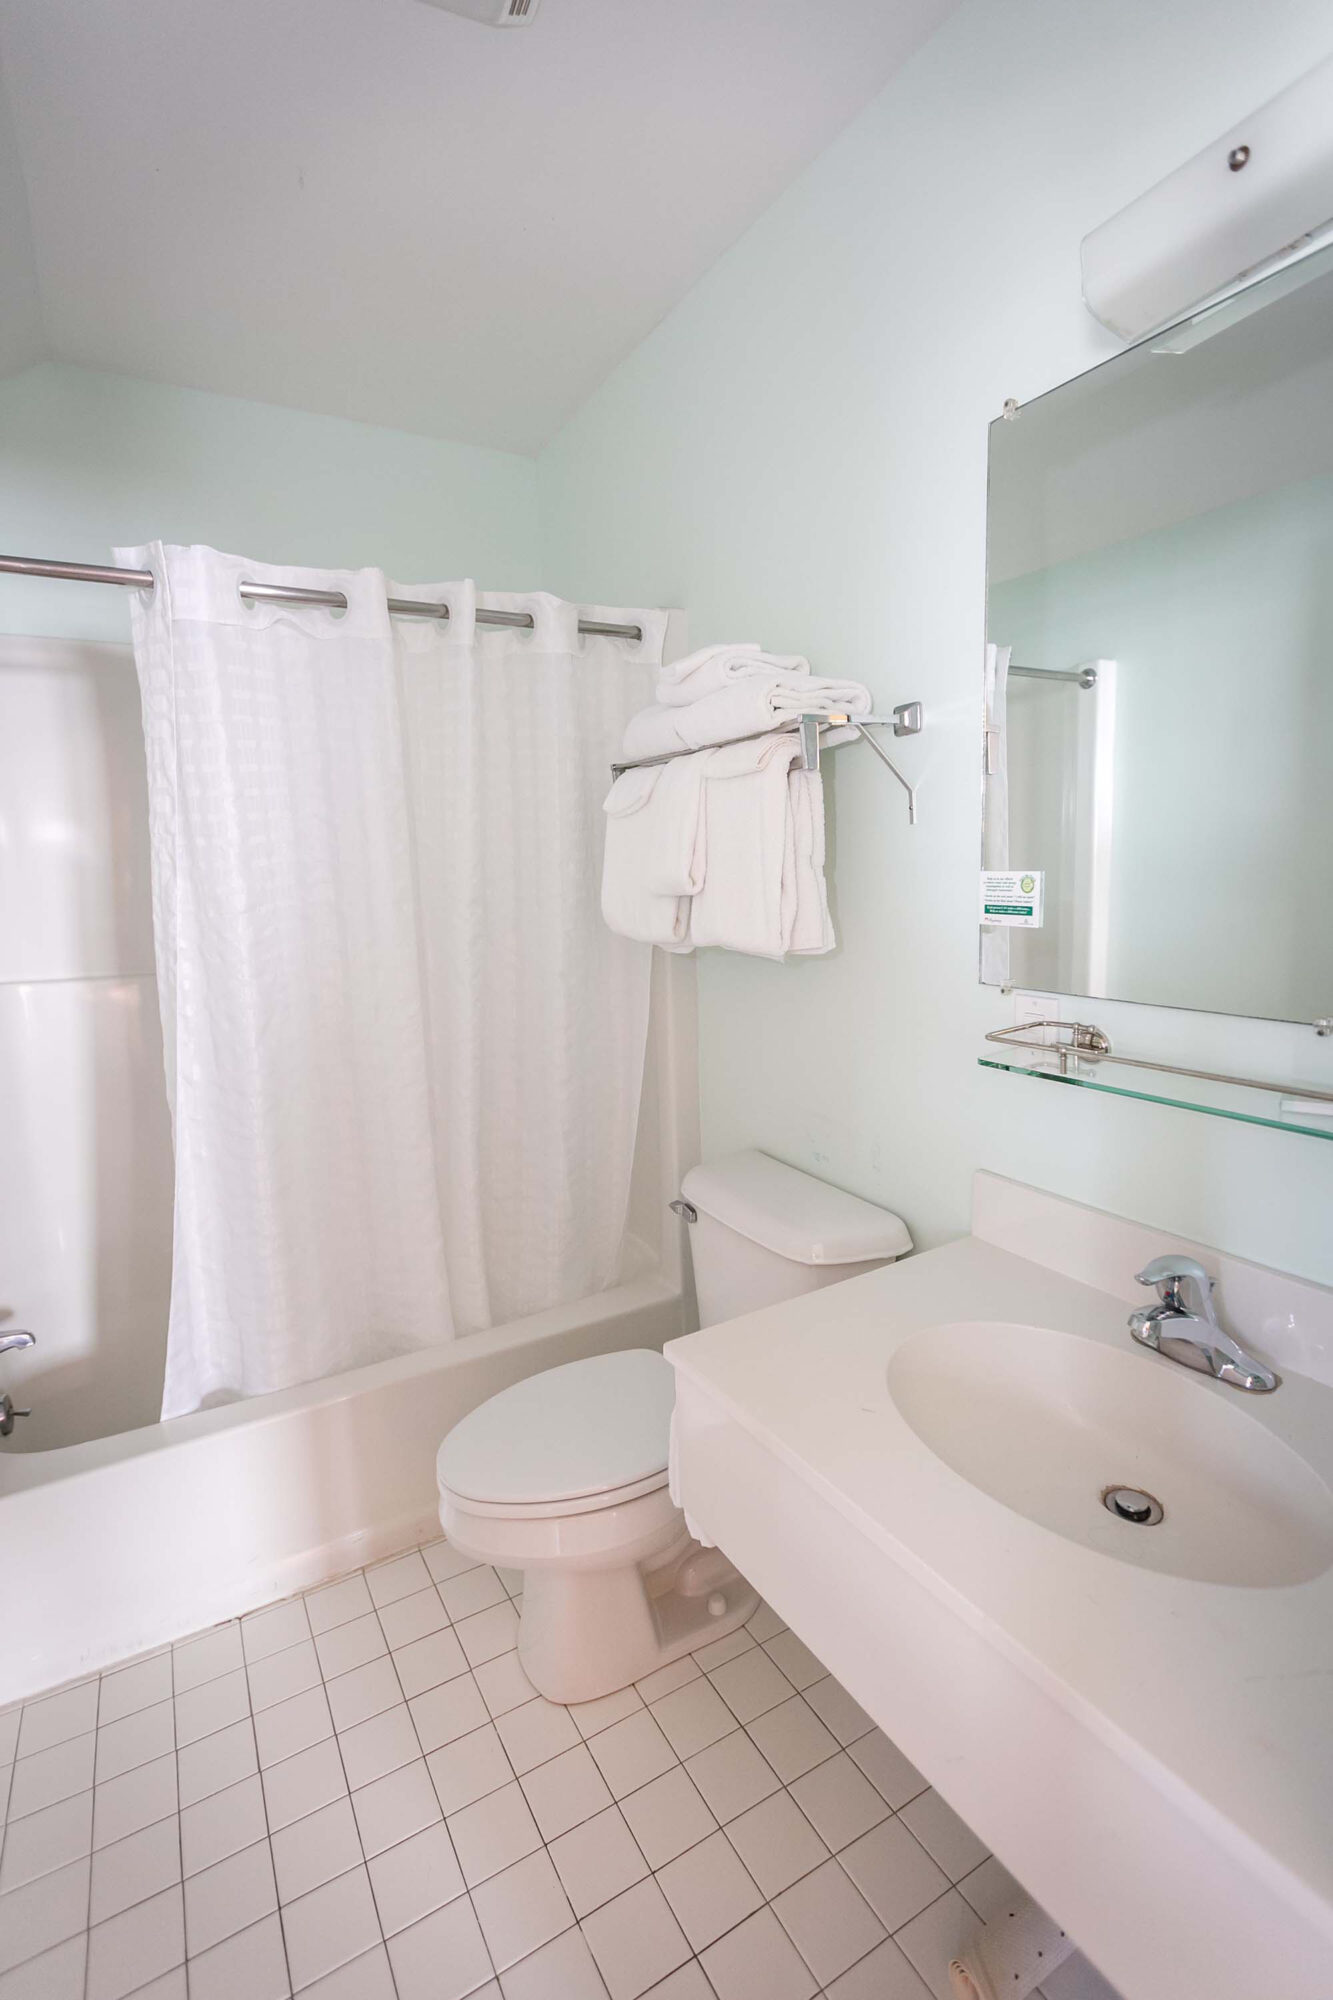 Bathroom in Hotel Room at the Island House Hotel on Mackinac Island